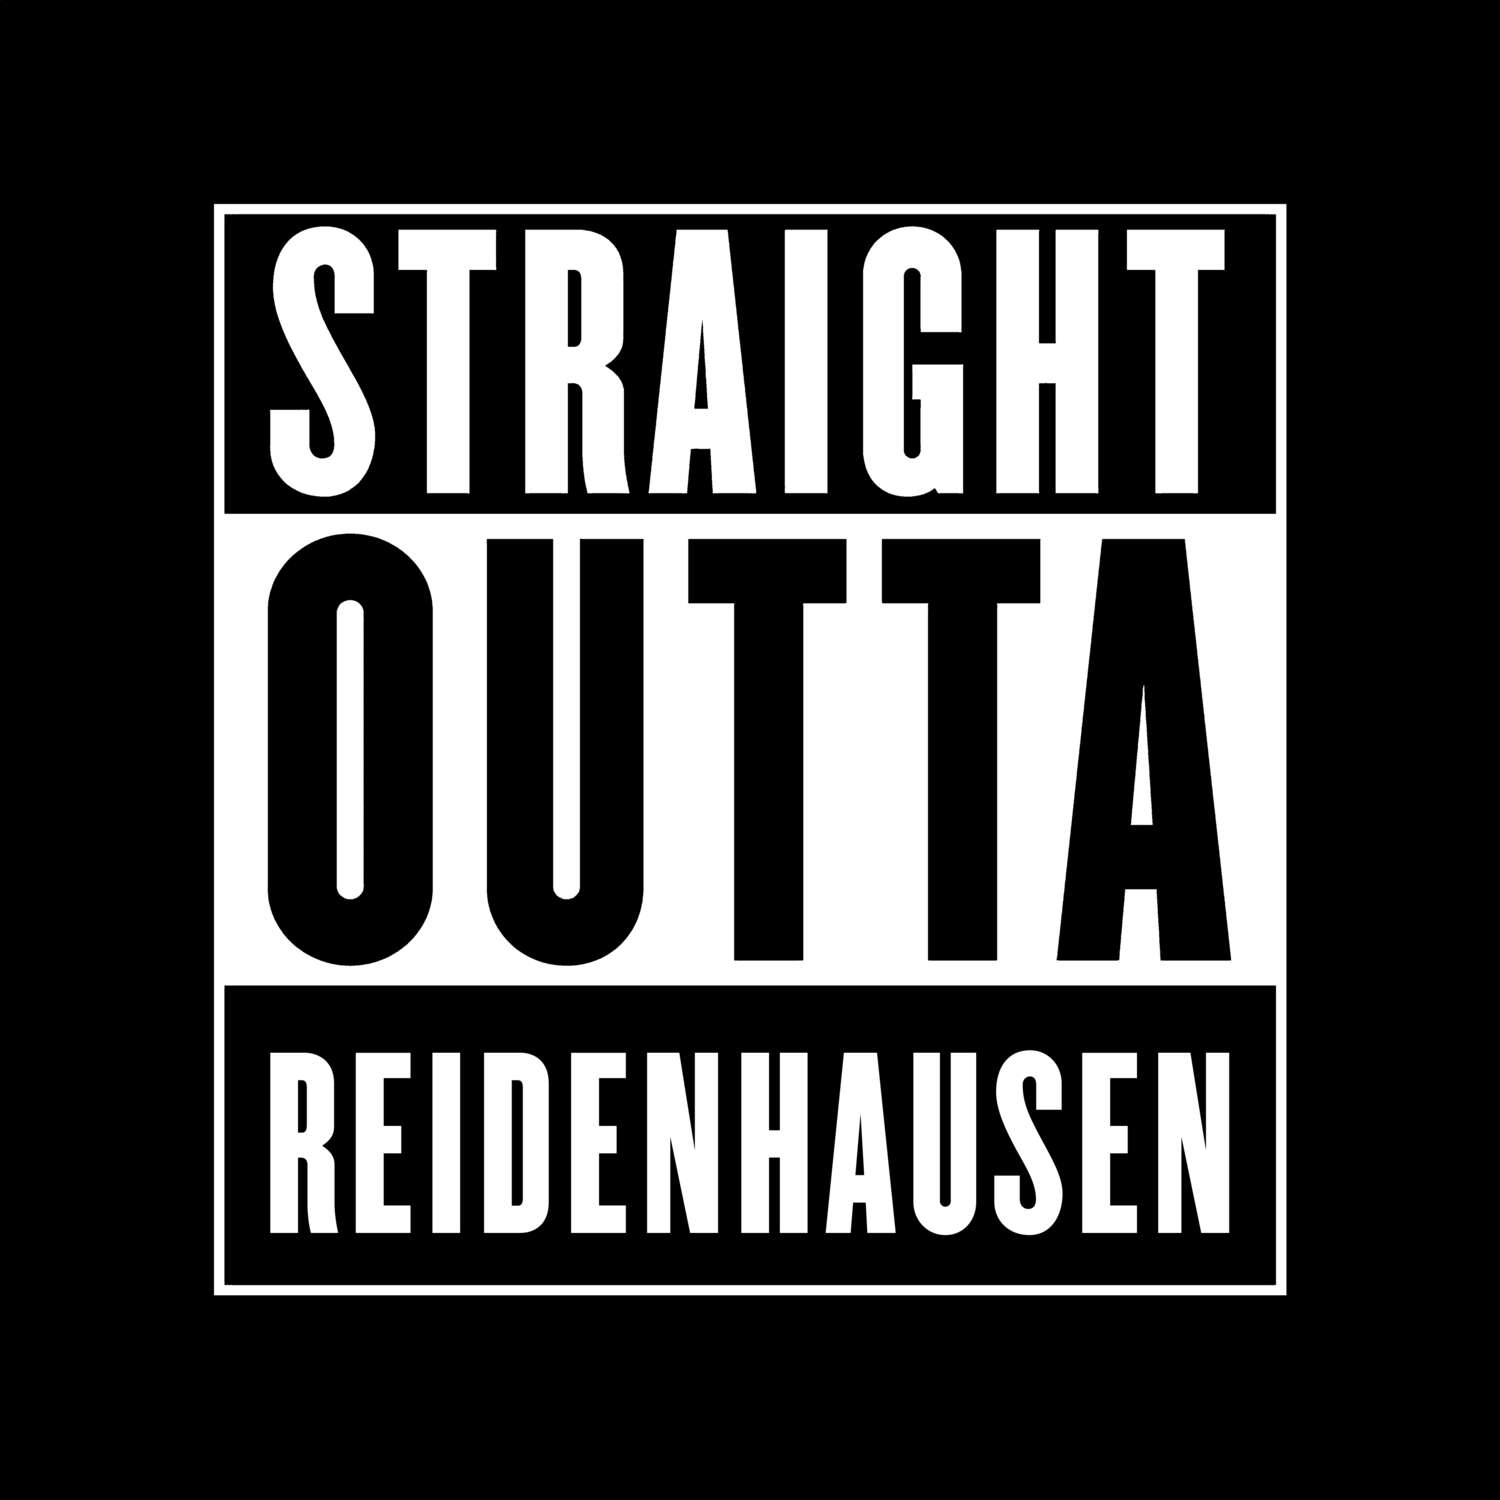 Reidenhausen T-Shirt »Straight Outta«